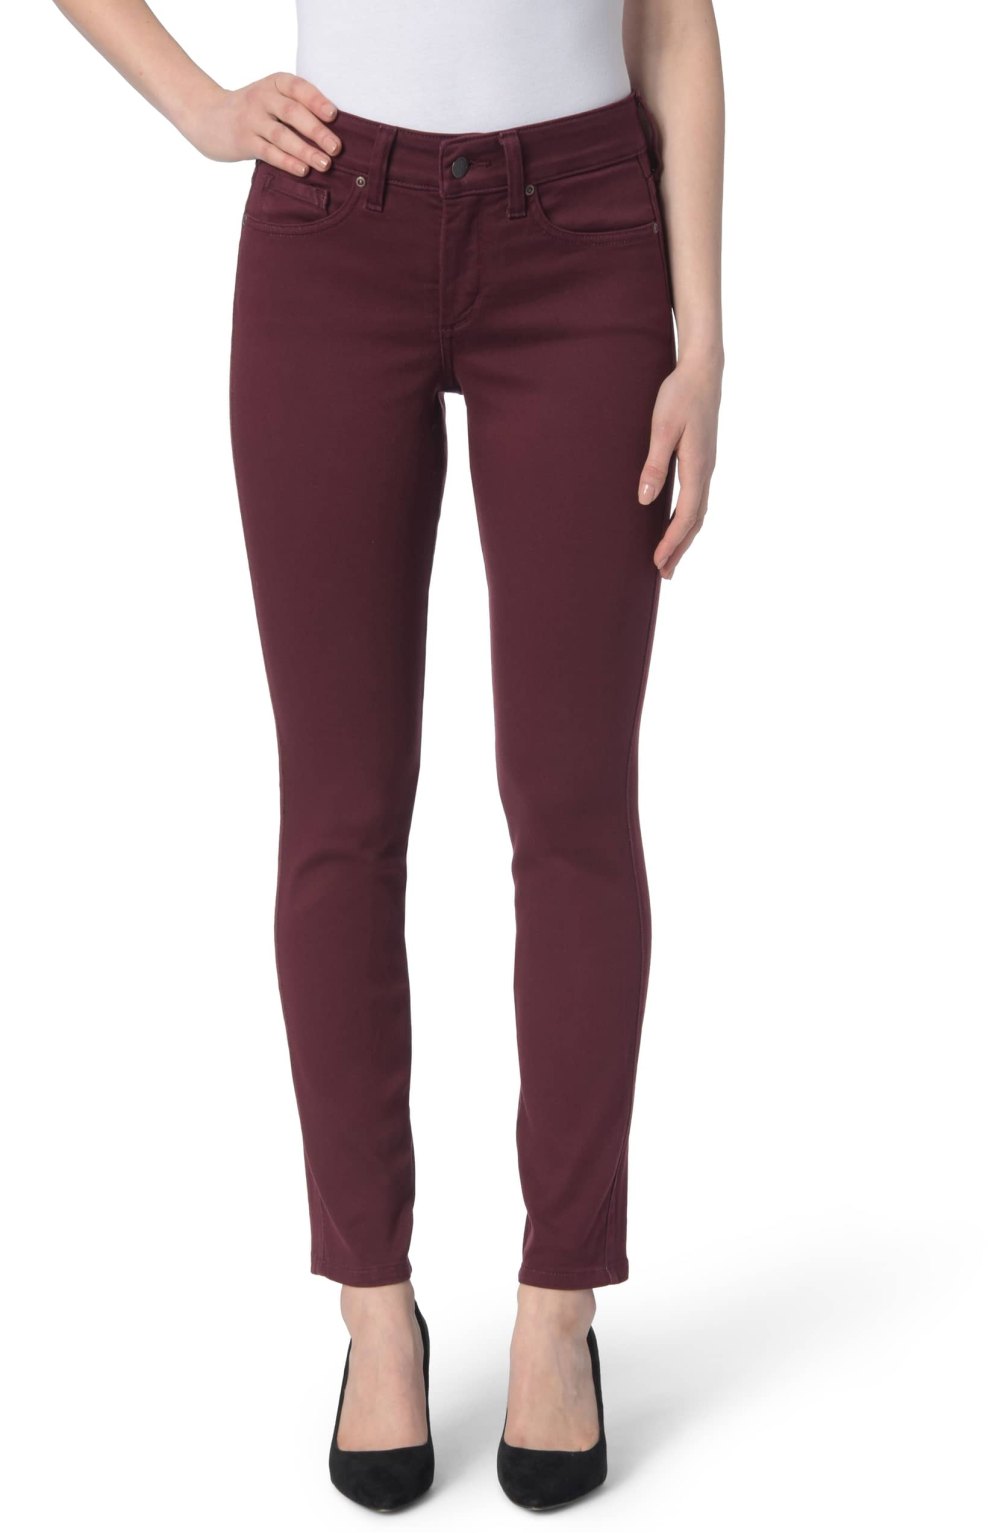 nydj high waist pants in burgundy or wine